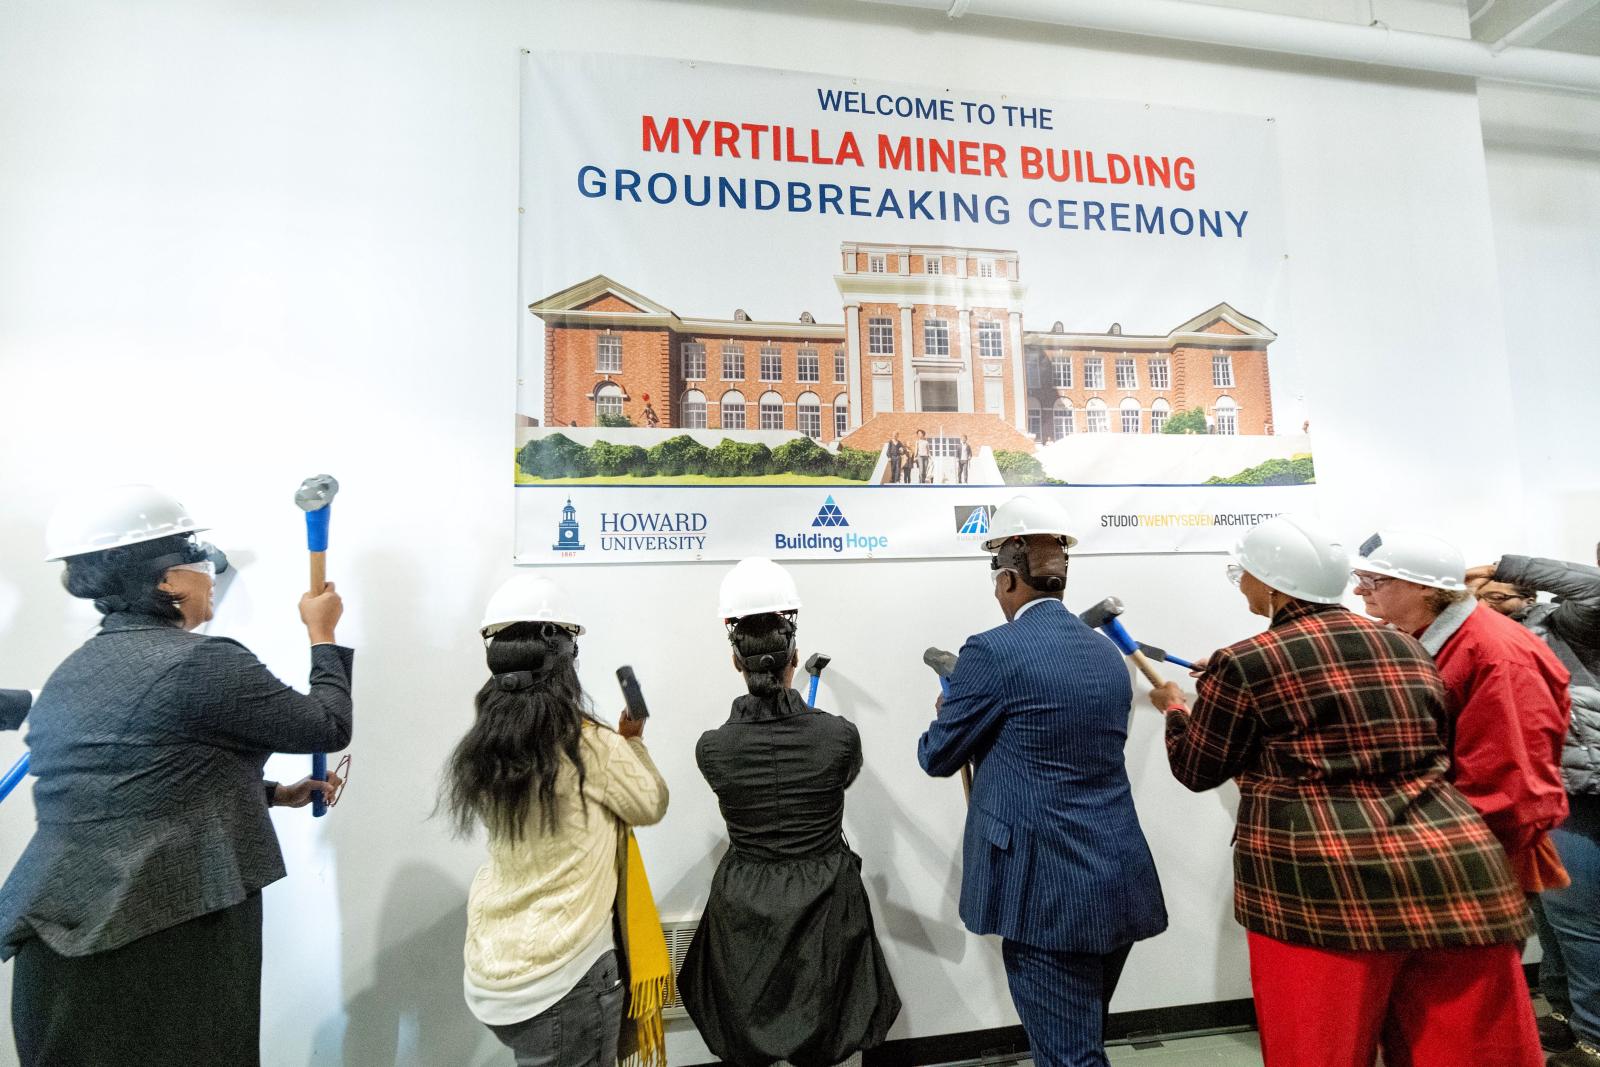 Groundbreaking of the Myrtilla Miner Building at Howard University